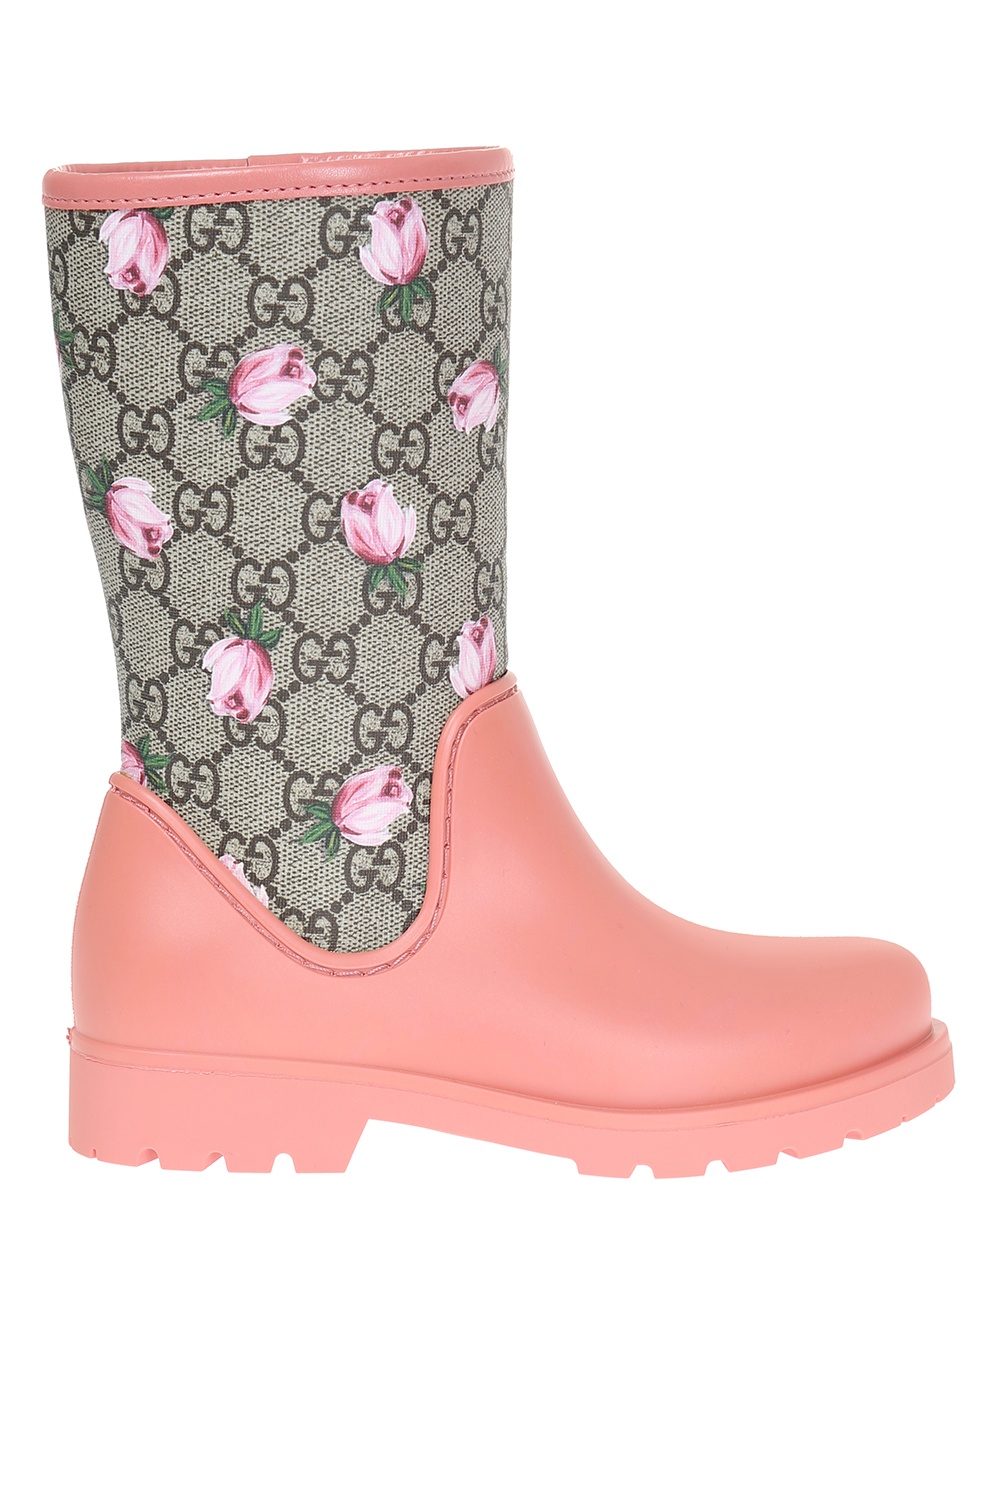 gucci floral rain boots